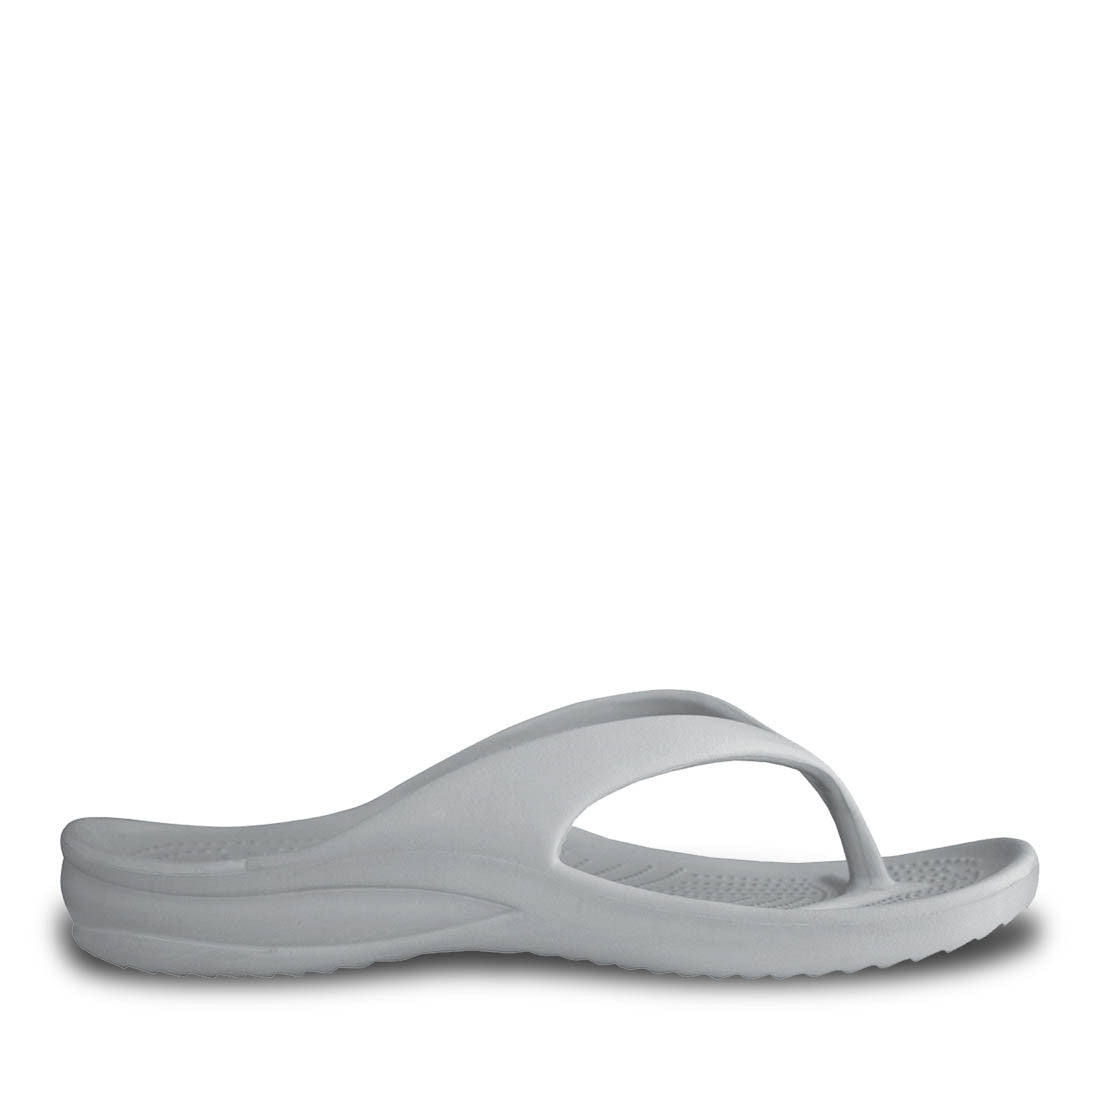 Dama Rubber Flip Flop Sandals - Black White 2 –